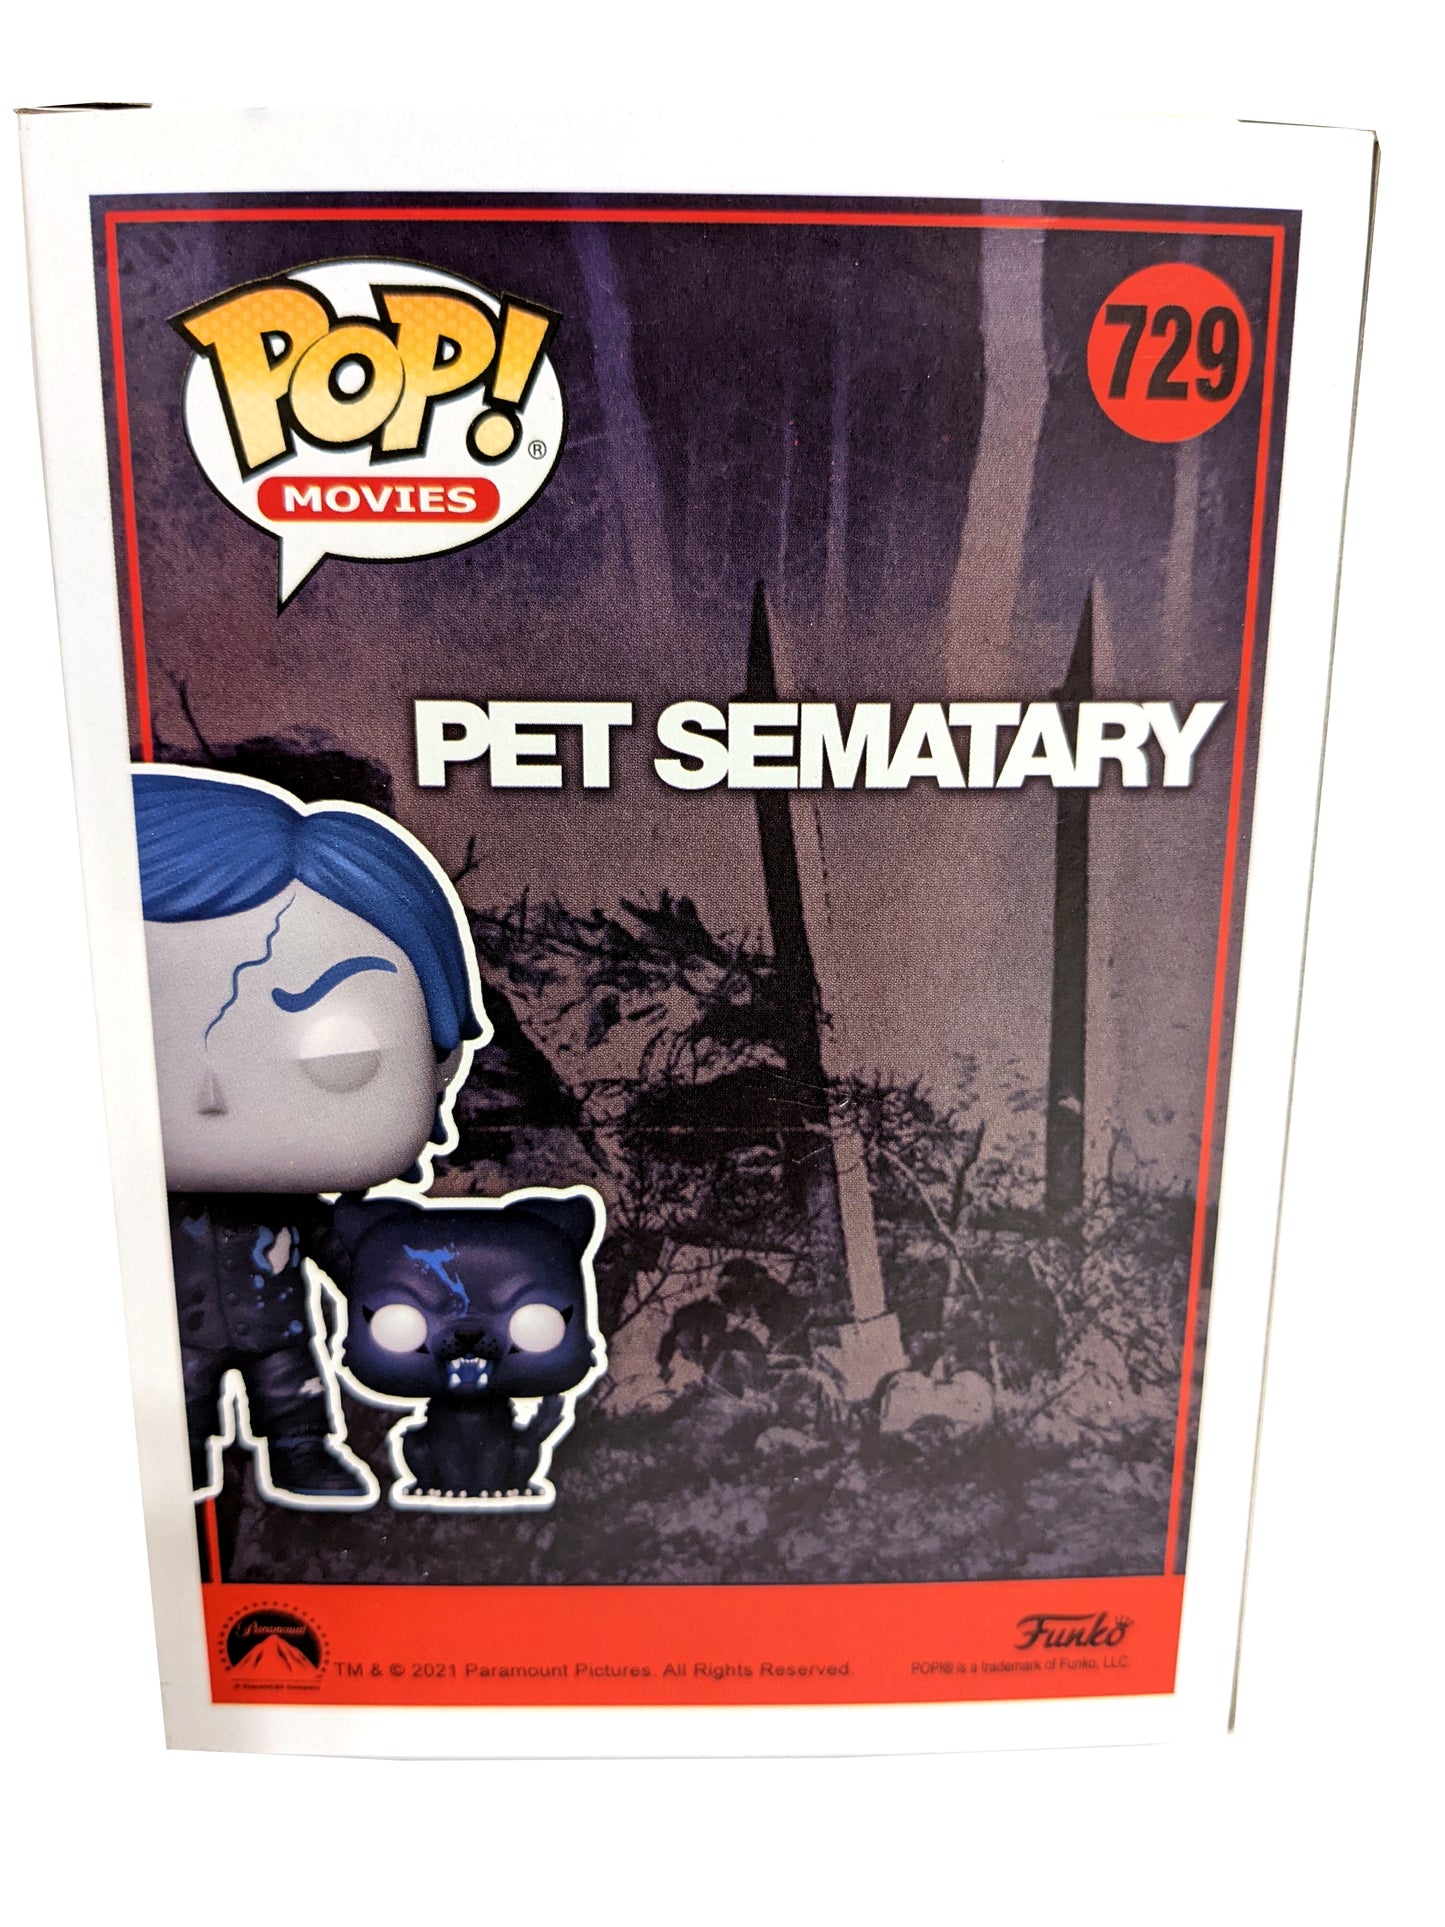 Funko Pop - Pet Sematary - Gage & Church - Glow in Dark - Walmart Exclusive # 729